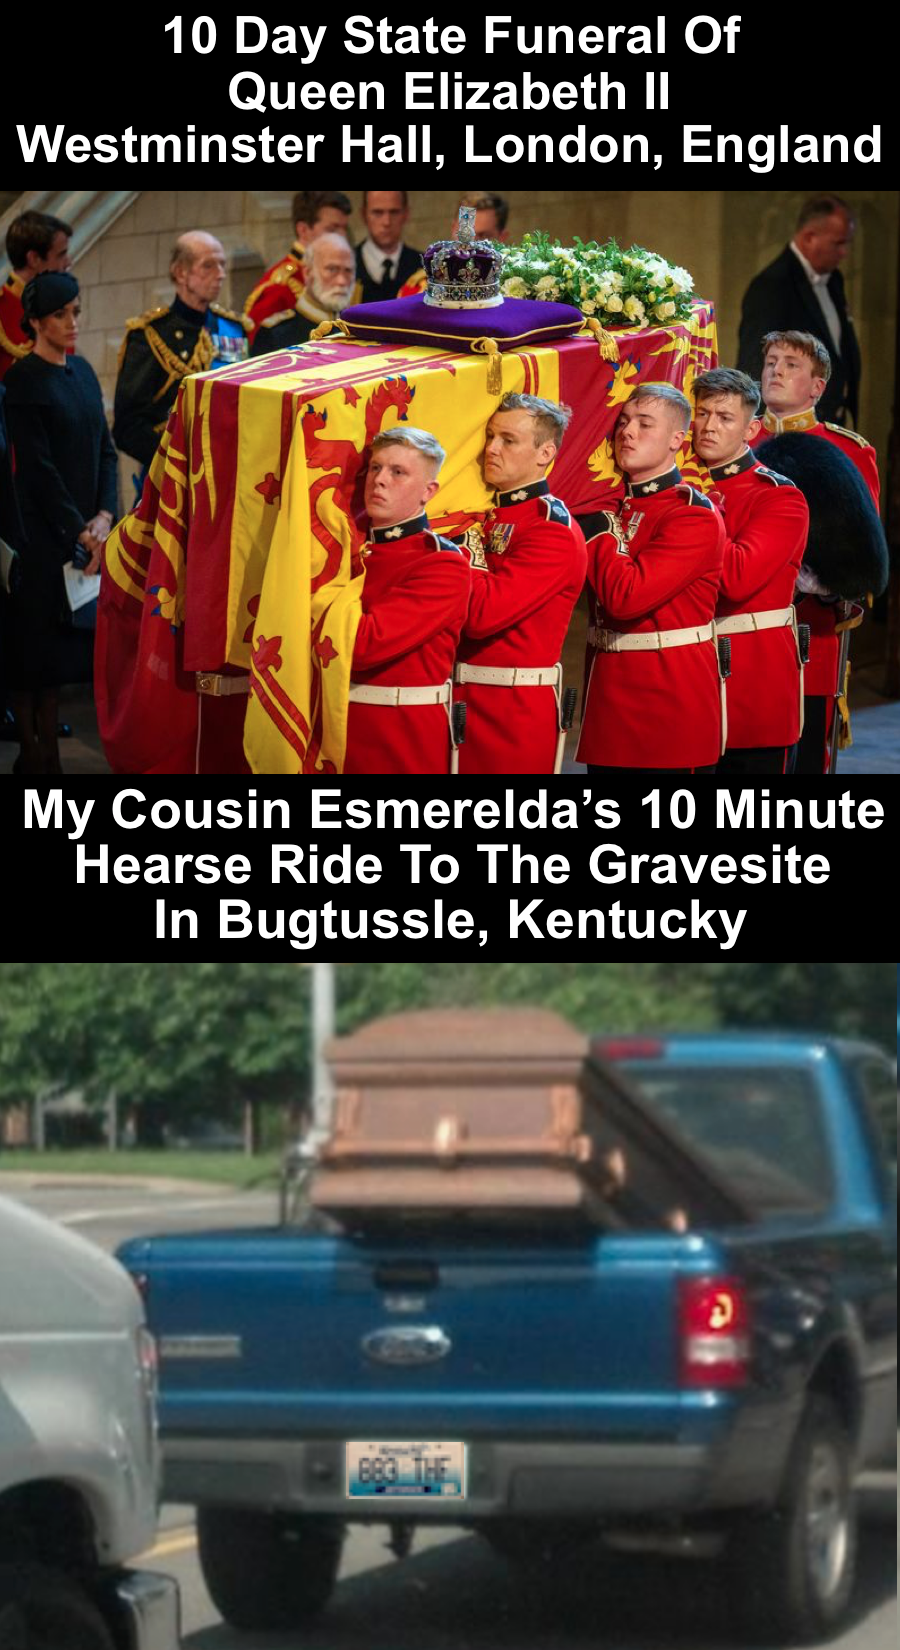 High Quality Queens Funeral Vs Cousin Esmerelda's Funeral Meme Blank Meme Template